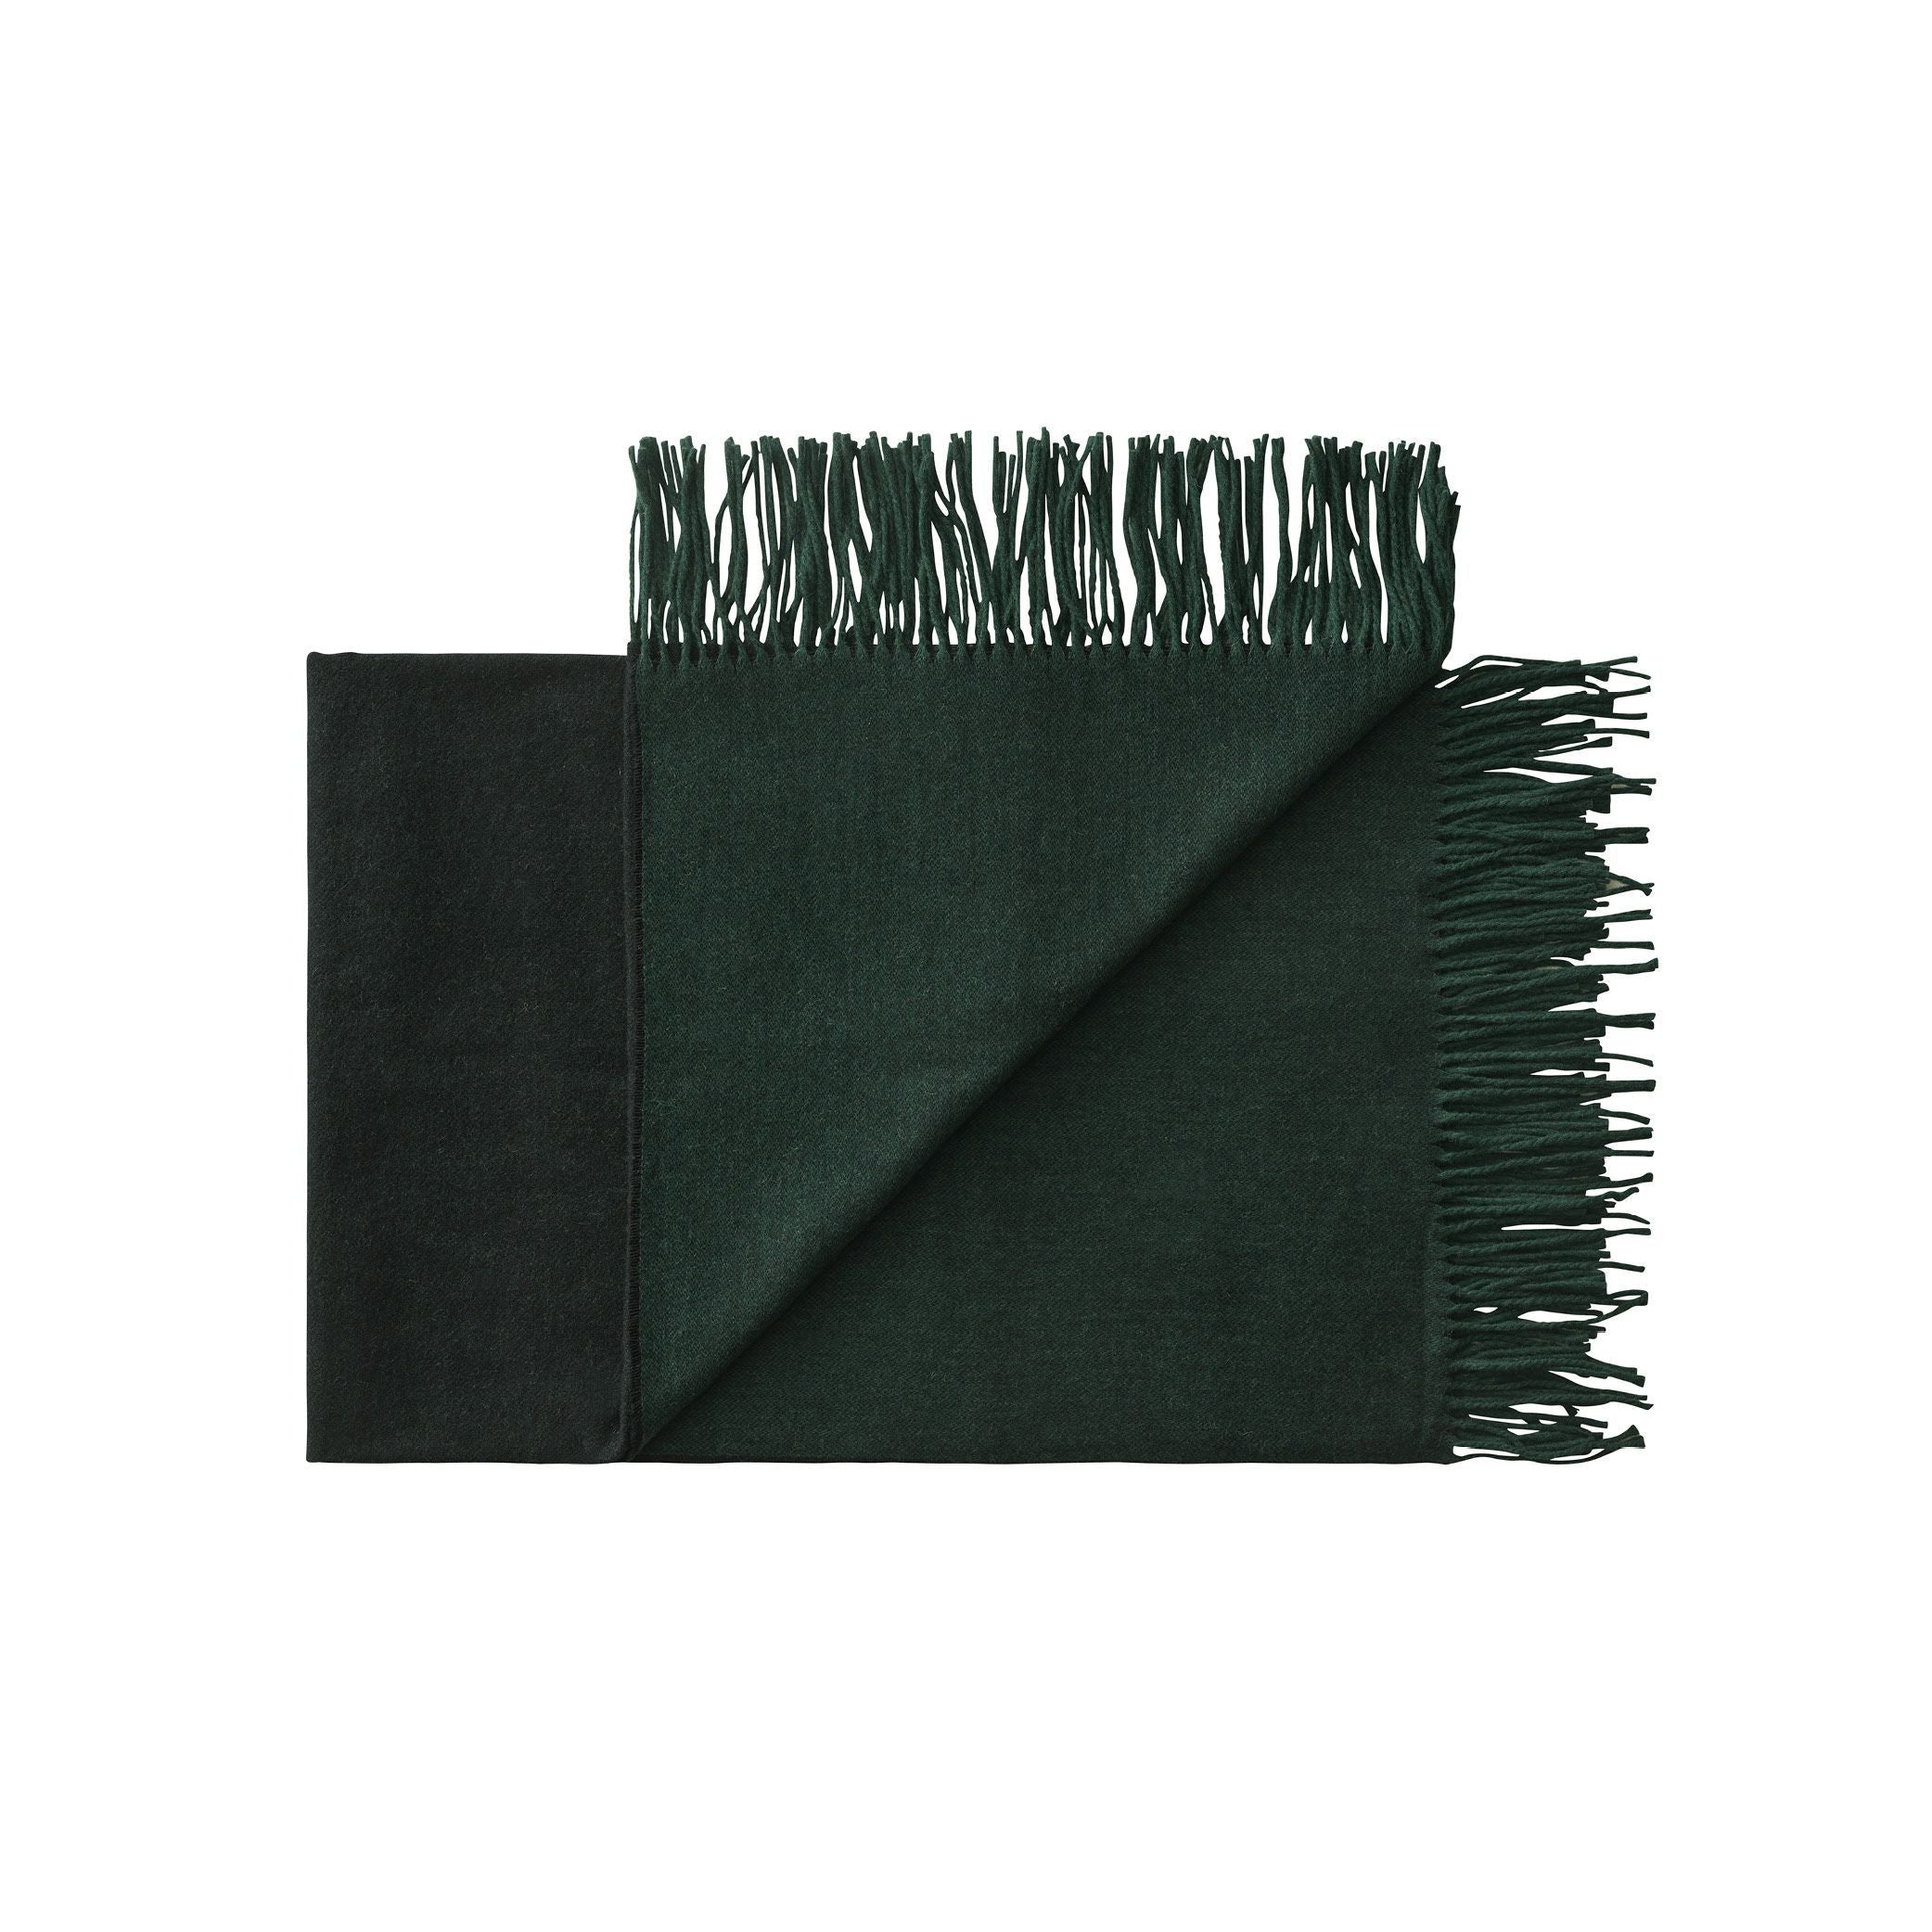 Silkeborg Uldspinderi Franja Throw 170x140 cm, groen/zwart